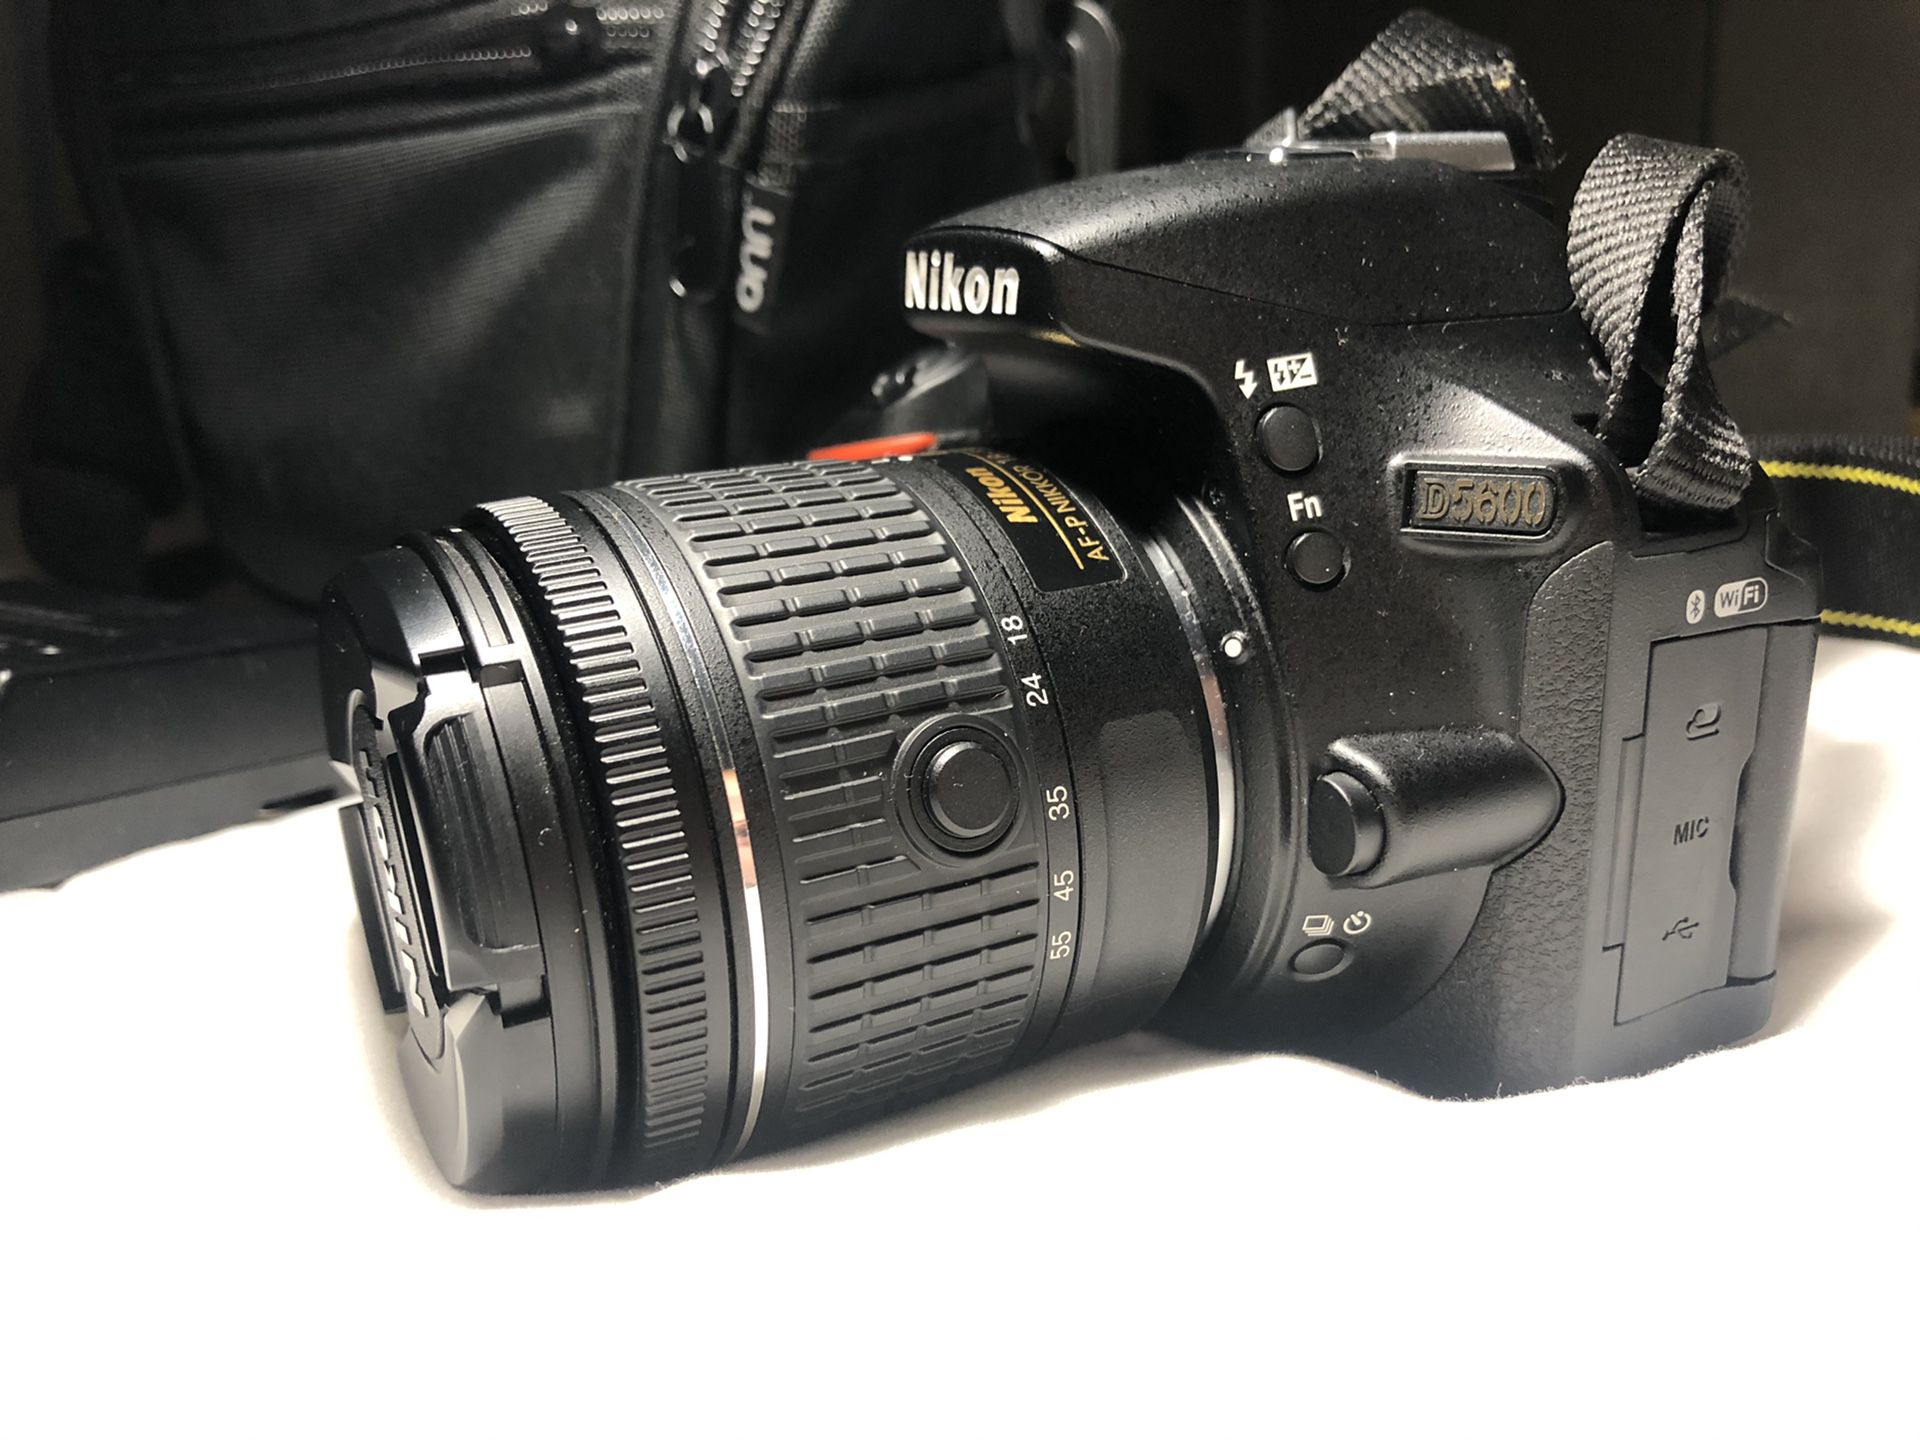 Nikon D5600 DSLR Camera with 18-55mm lens